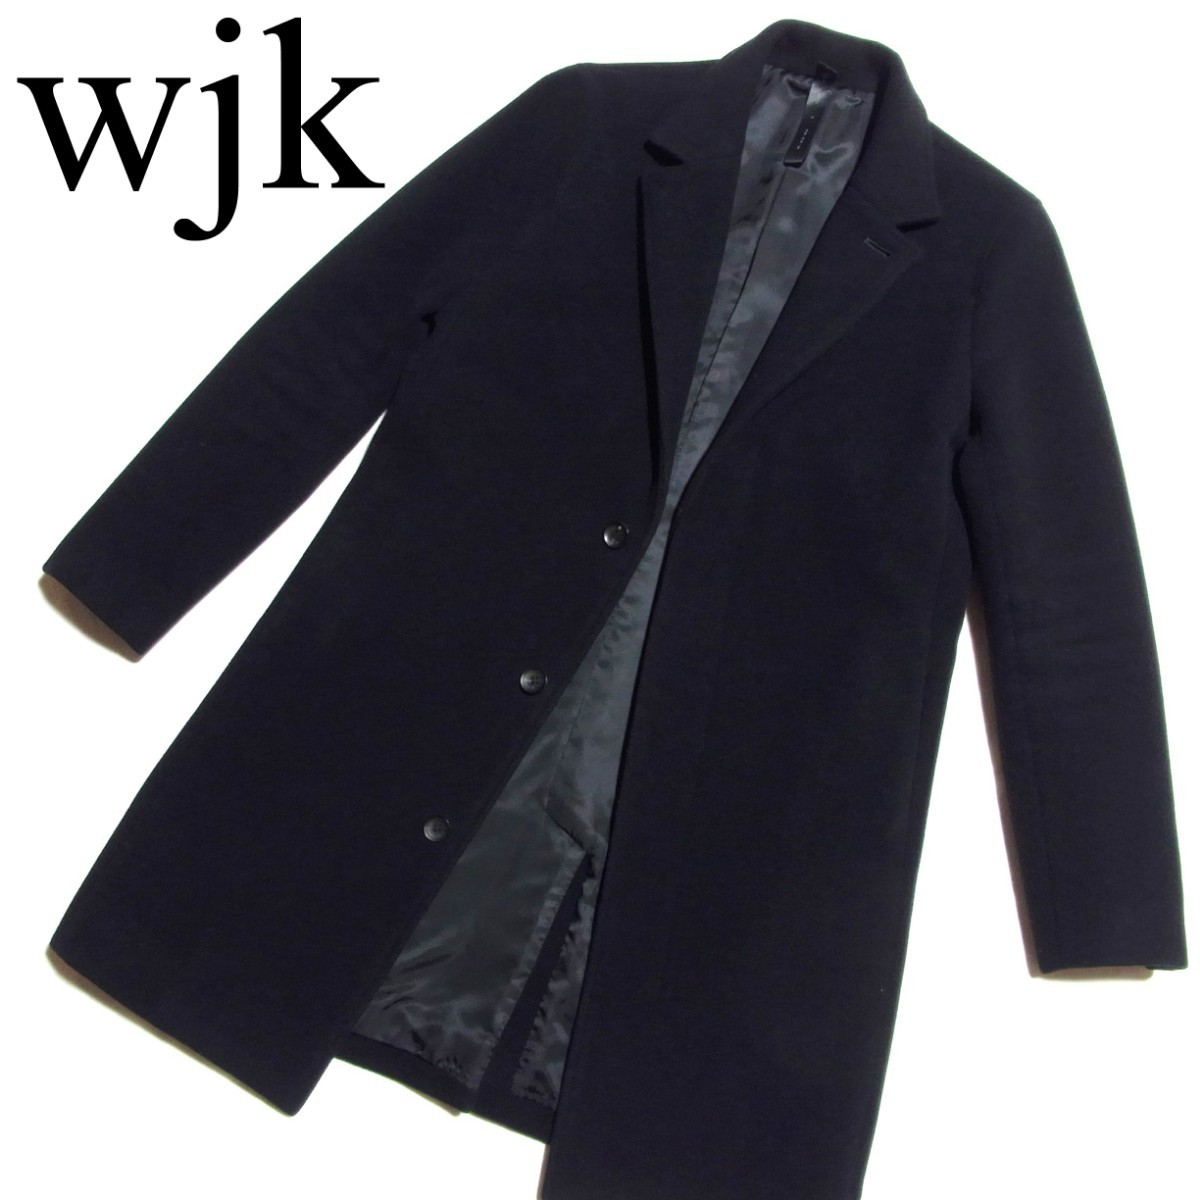 wjk fine wool chester メルトン チェスターコート S 黒 ブラック 1817 wl77h